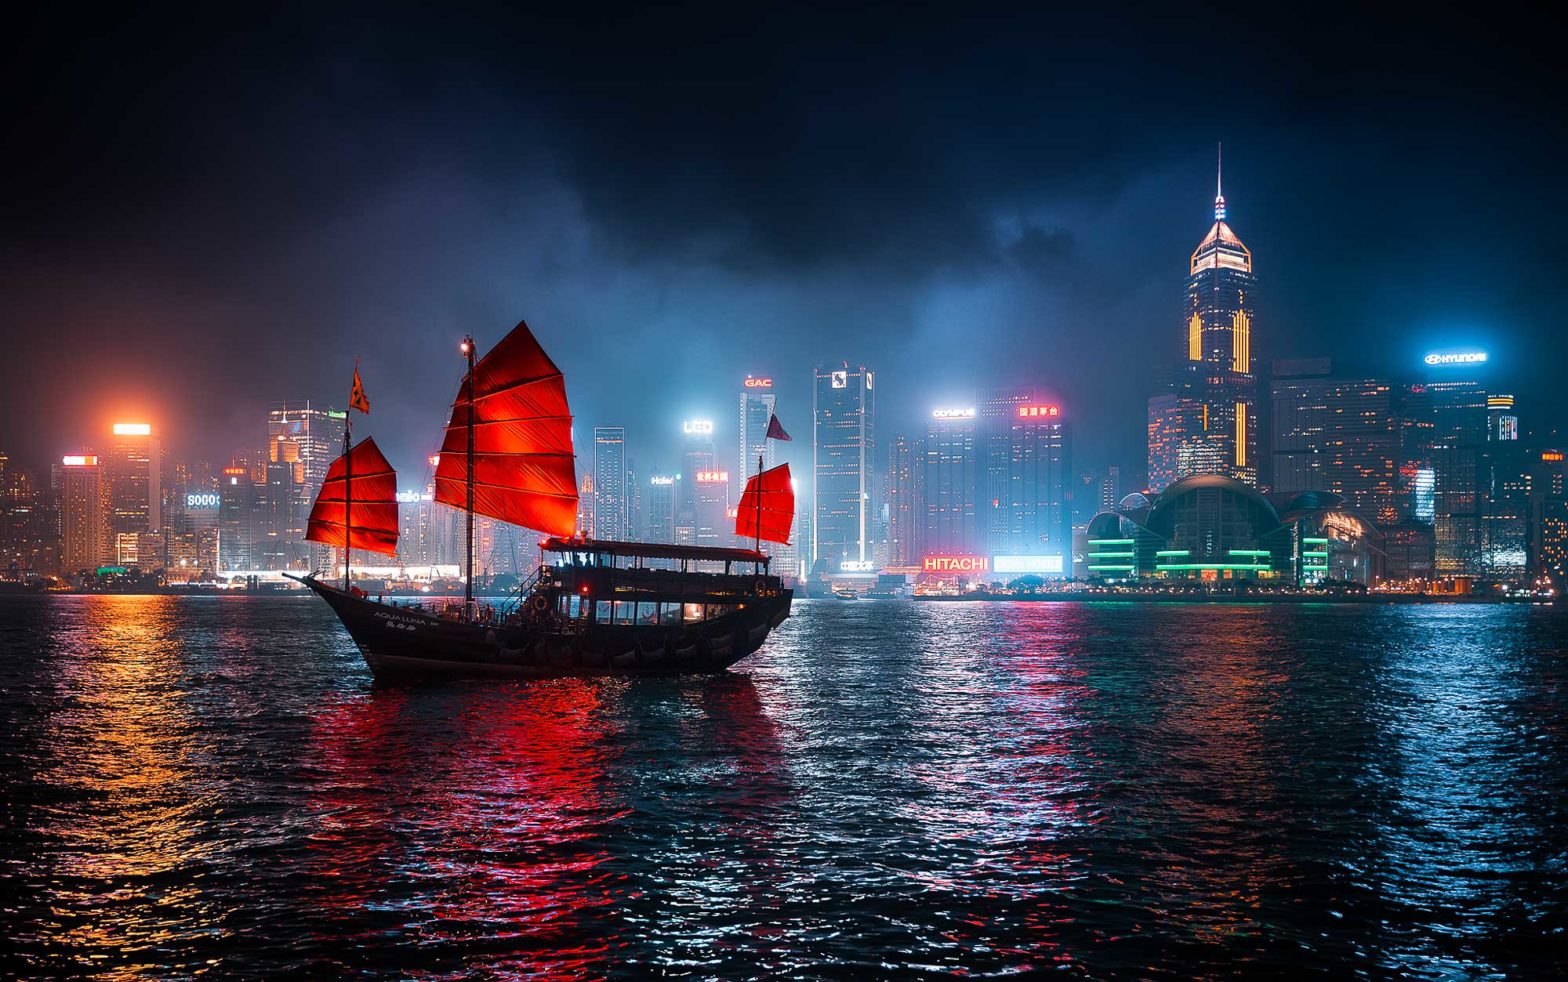 Hong Kong, Junk, boat, tip, photo, night, photography, cityscape, tour